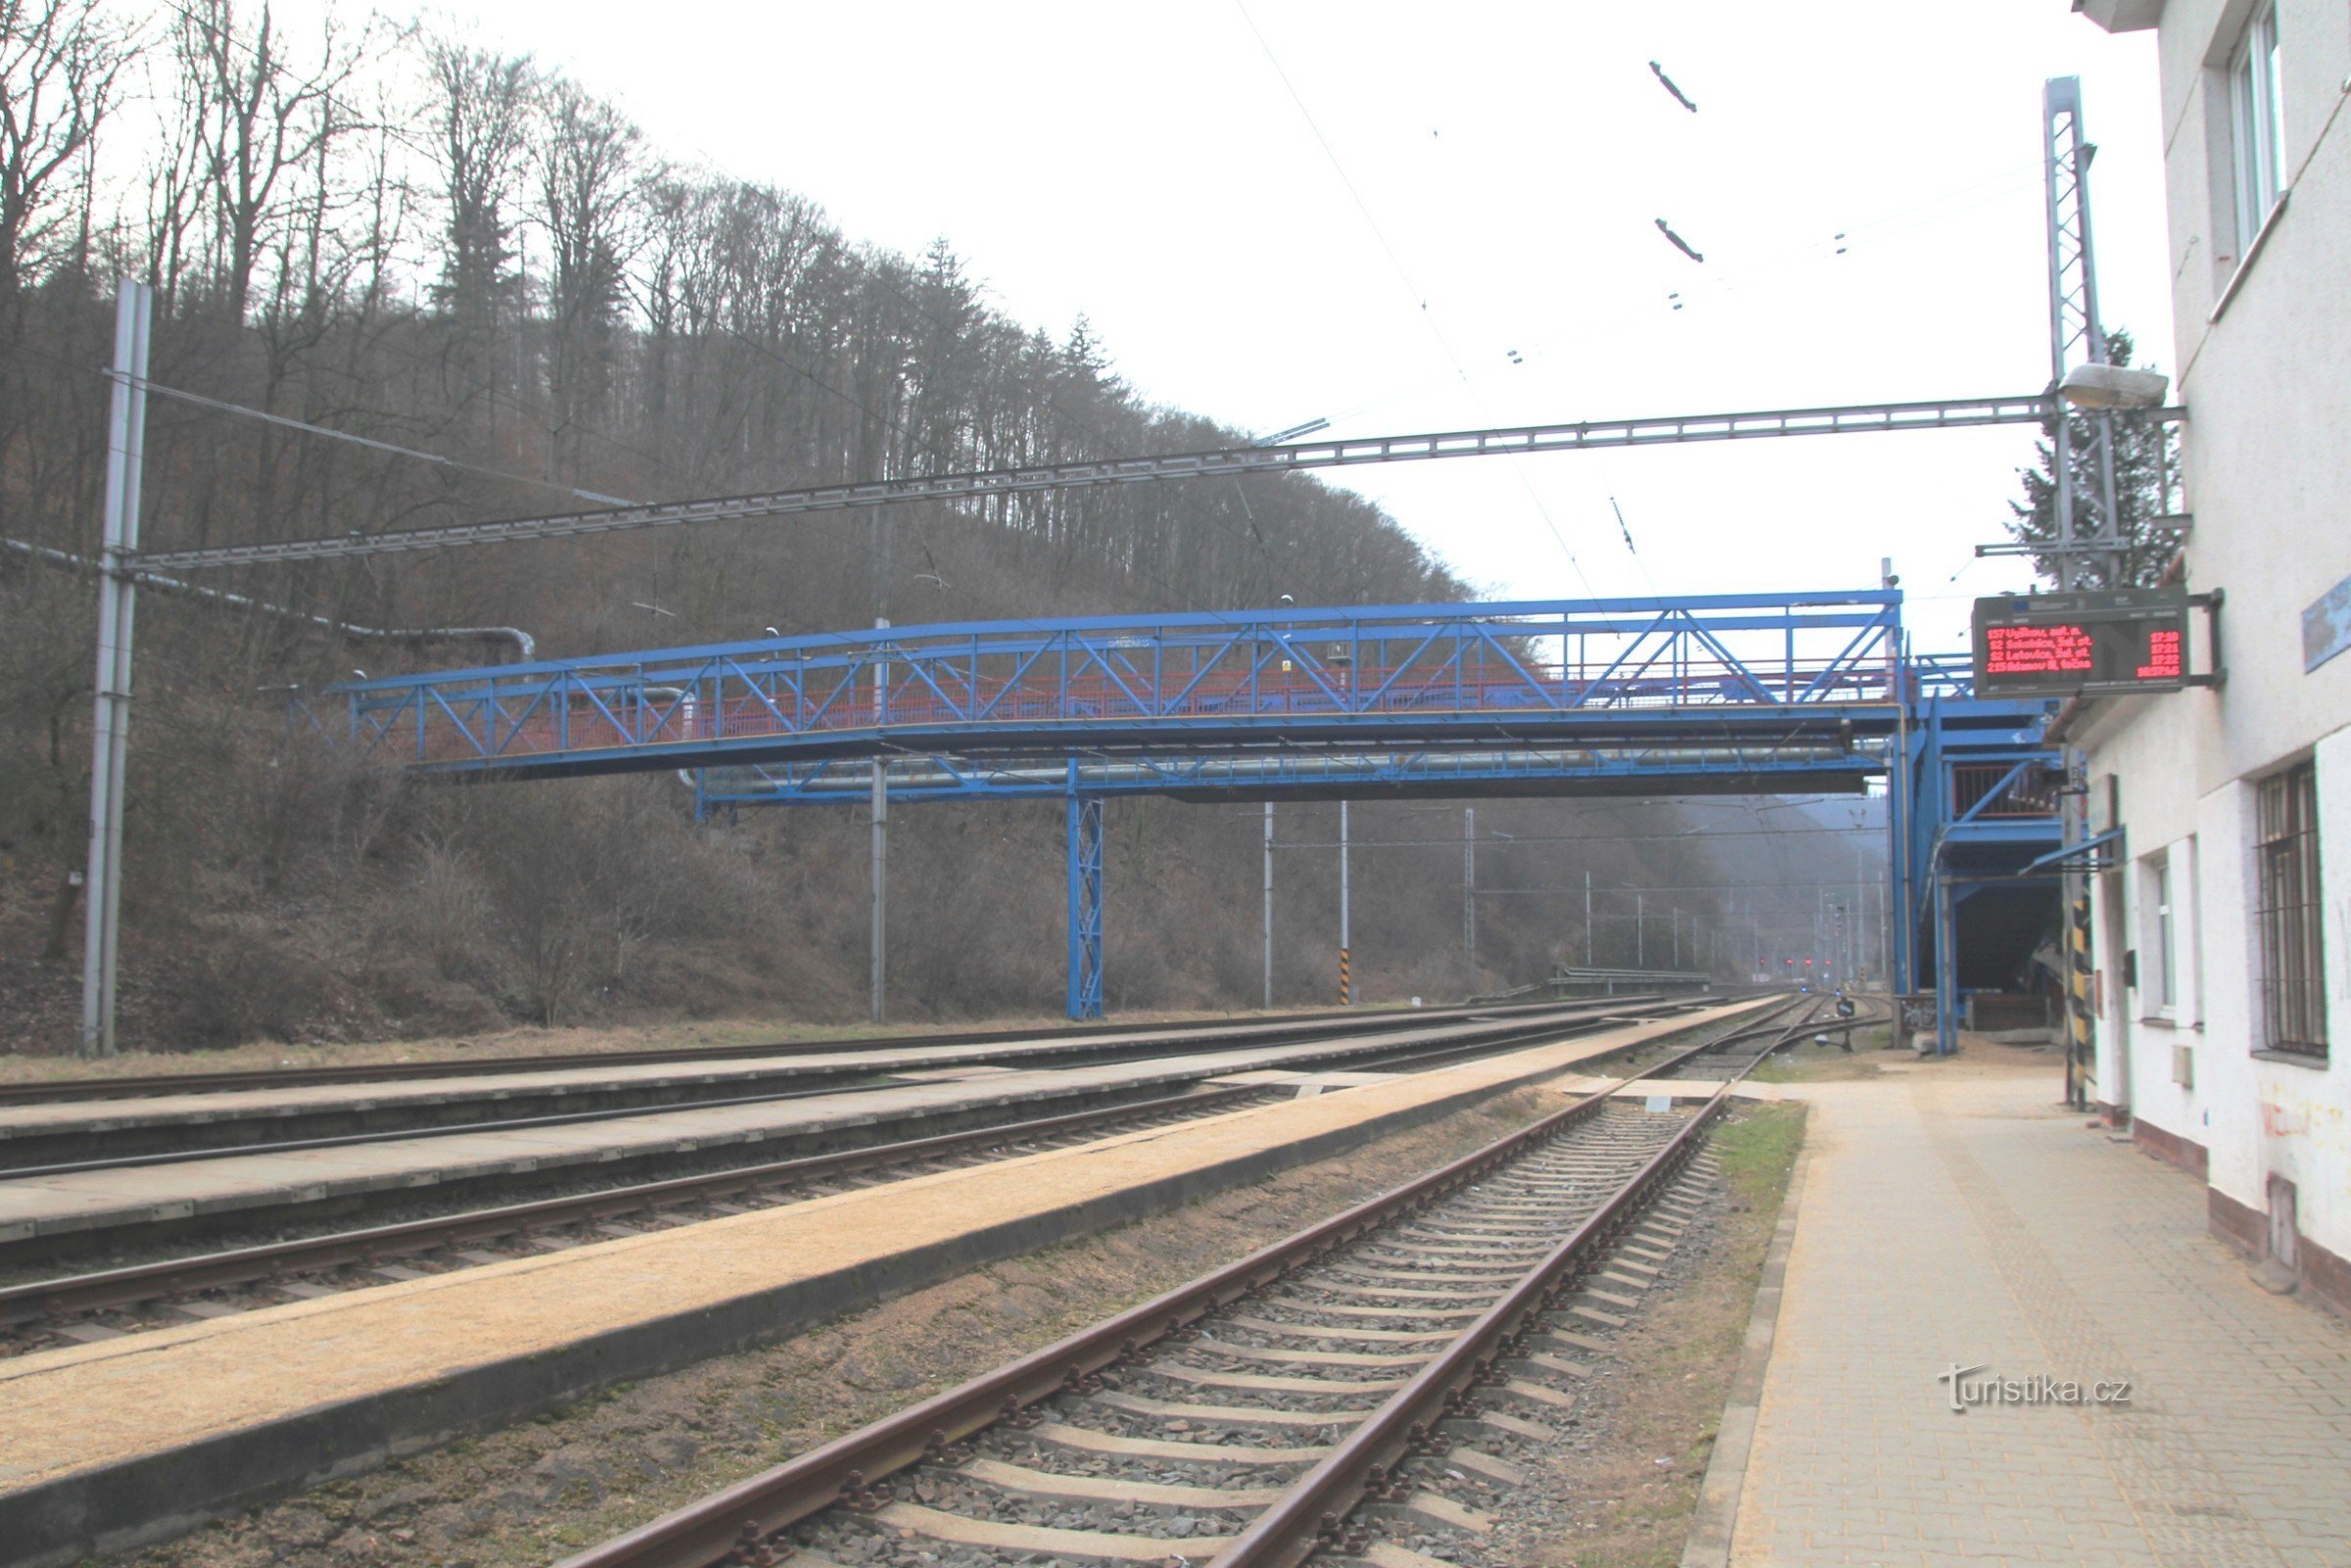 View of the footbridge from the railway yard, behind it the industrial bridge from the Adastu boiler house